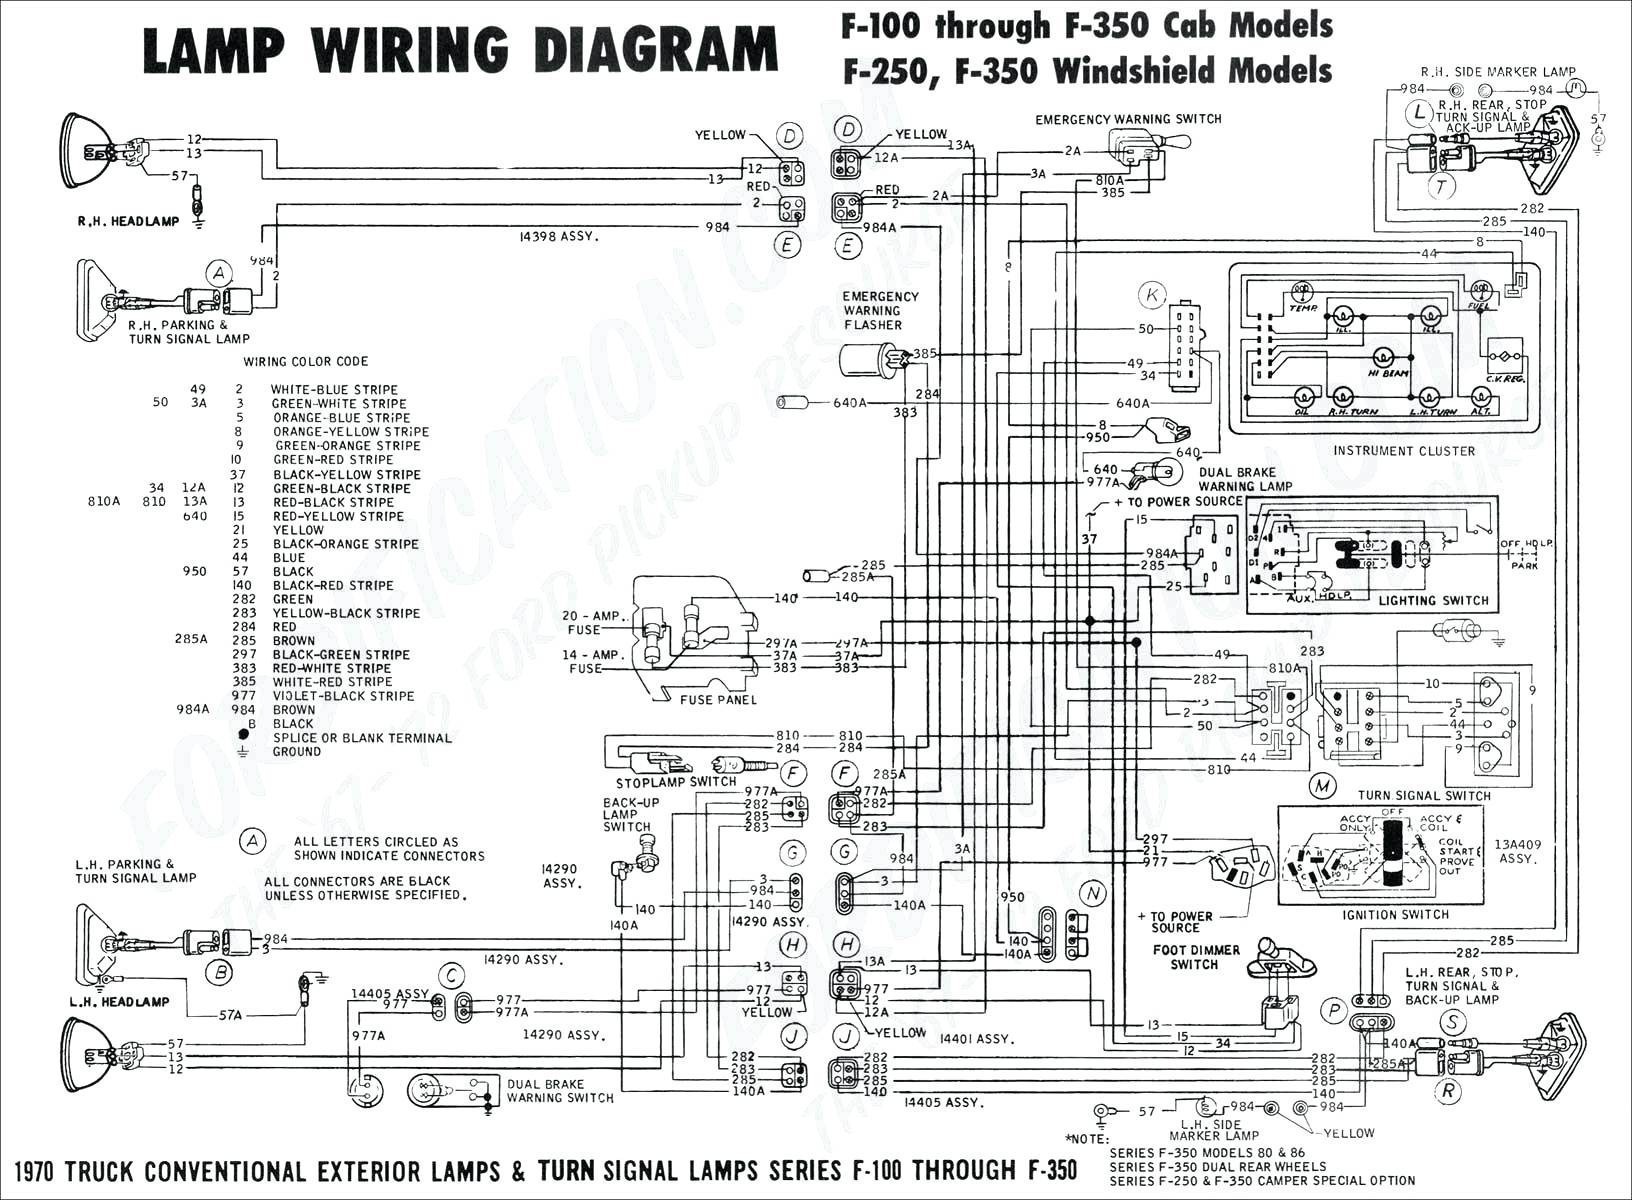 1998 Chevy Truck Brake Light Wiring Diagram Wiring Diagram Fuel Pump Avanza Fresh 1998 Chevy Silverado Fuel Pump Of 1998 Chevy Truck Brake Light Wiring Diagram